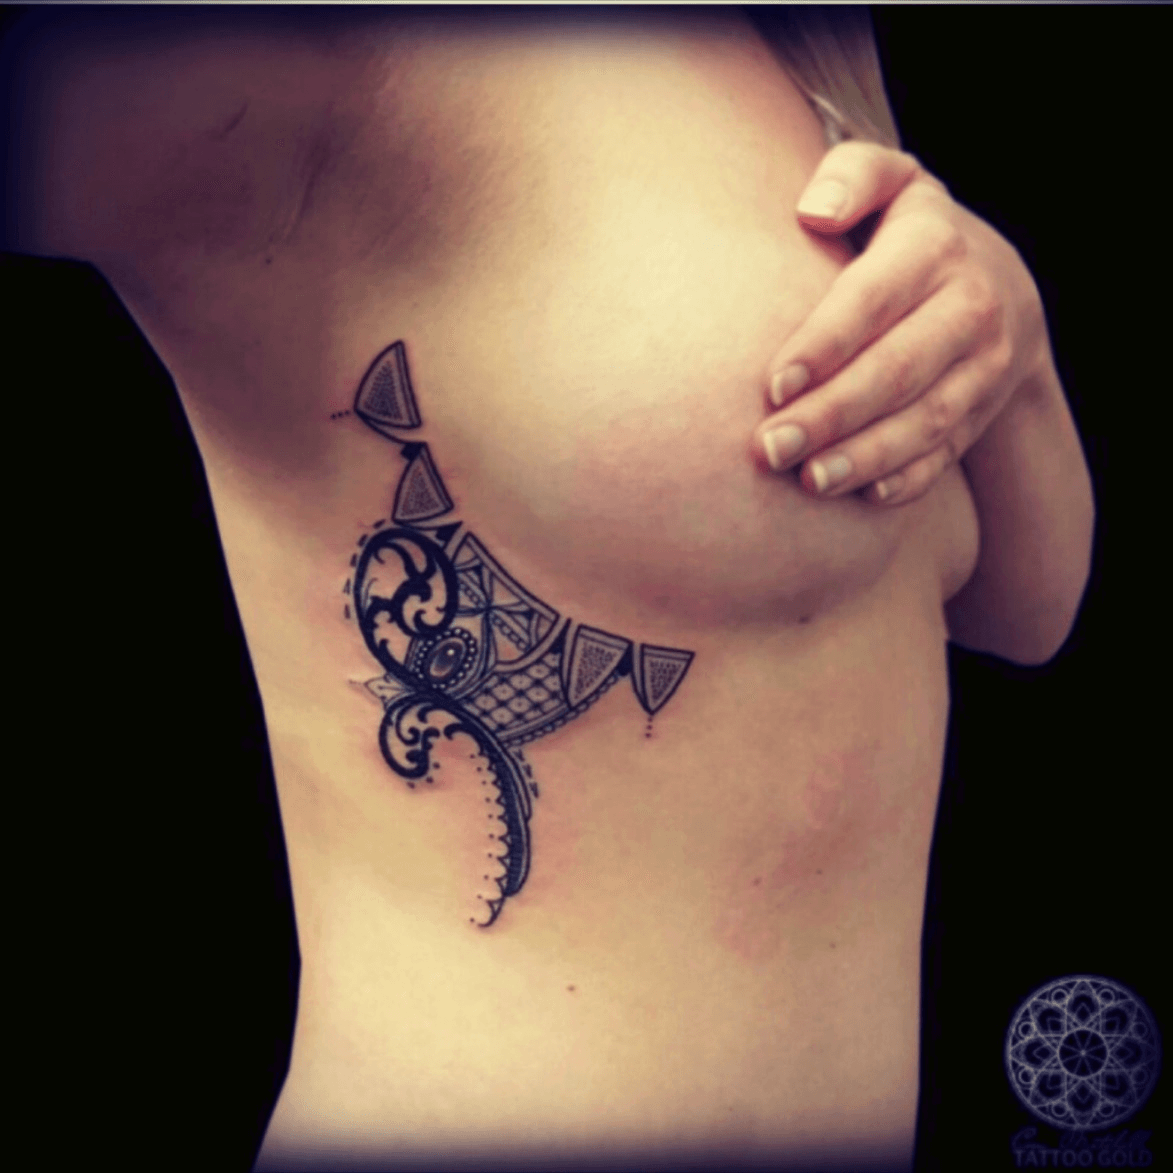 Tattoo uploaded by Tara • I love this ones design. Beautiful! #sternum # underboob #pelvis #mandala • Tattoodo